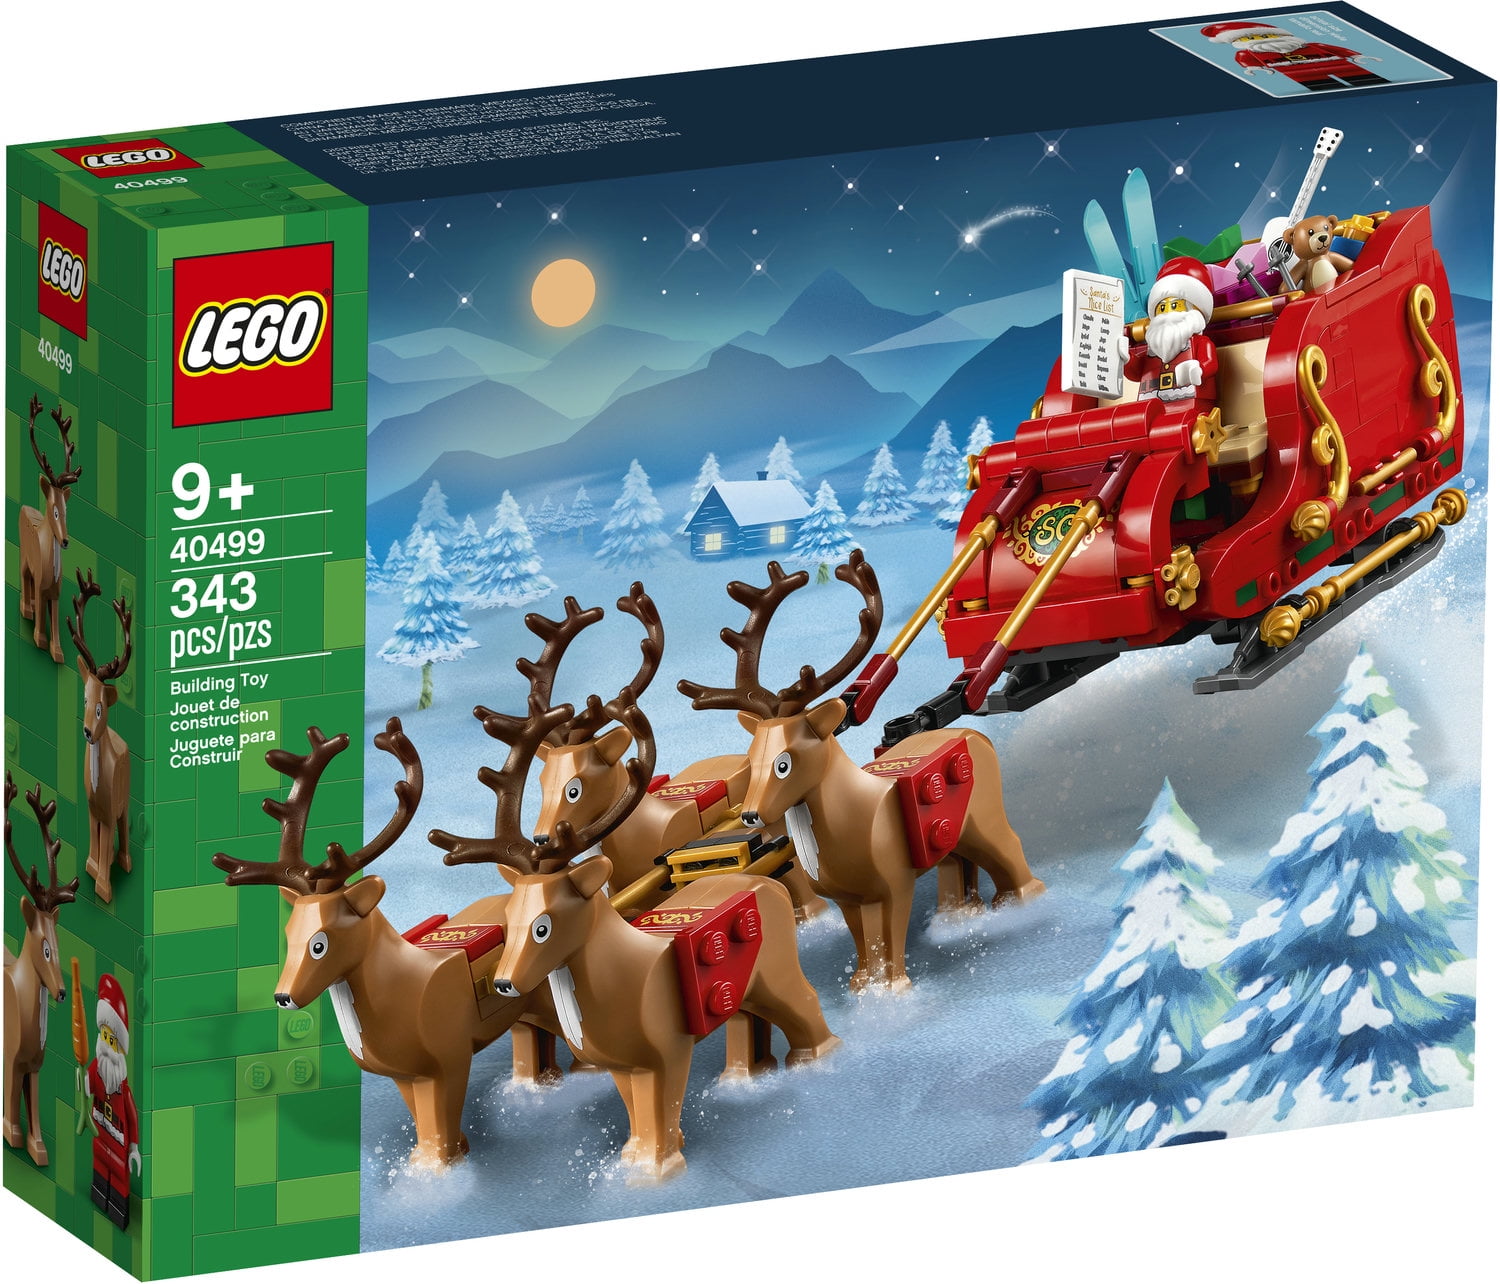 LEGO Holiday Santa's Sleigh Exclusive Set 40499 - Walmart.com